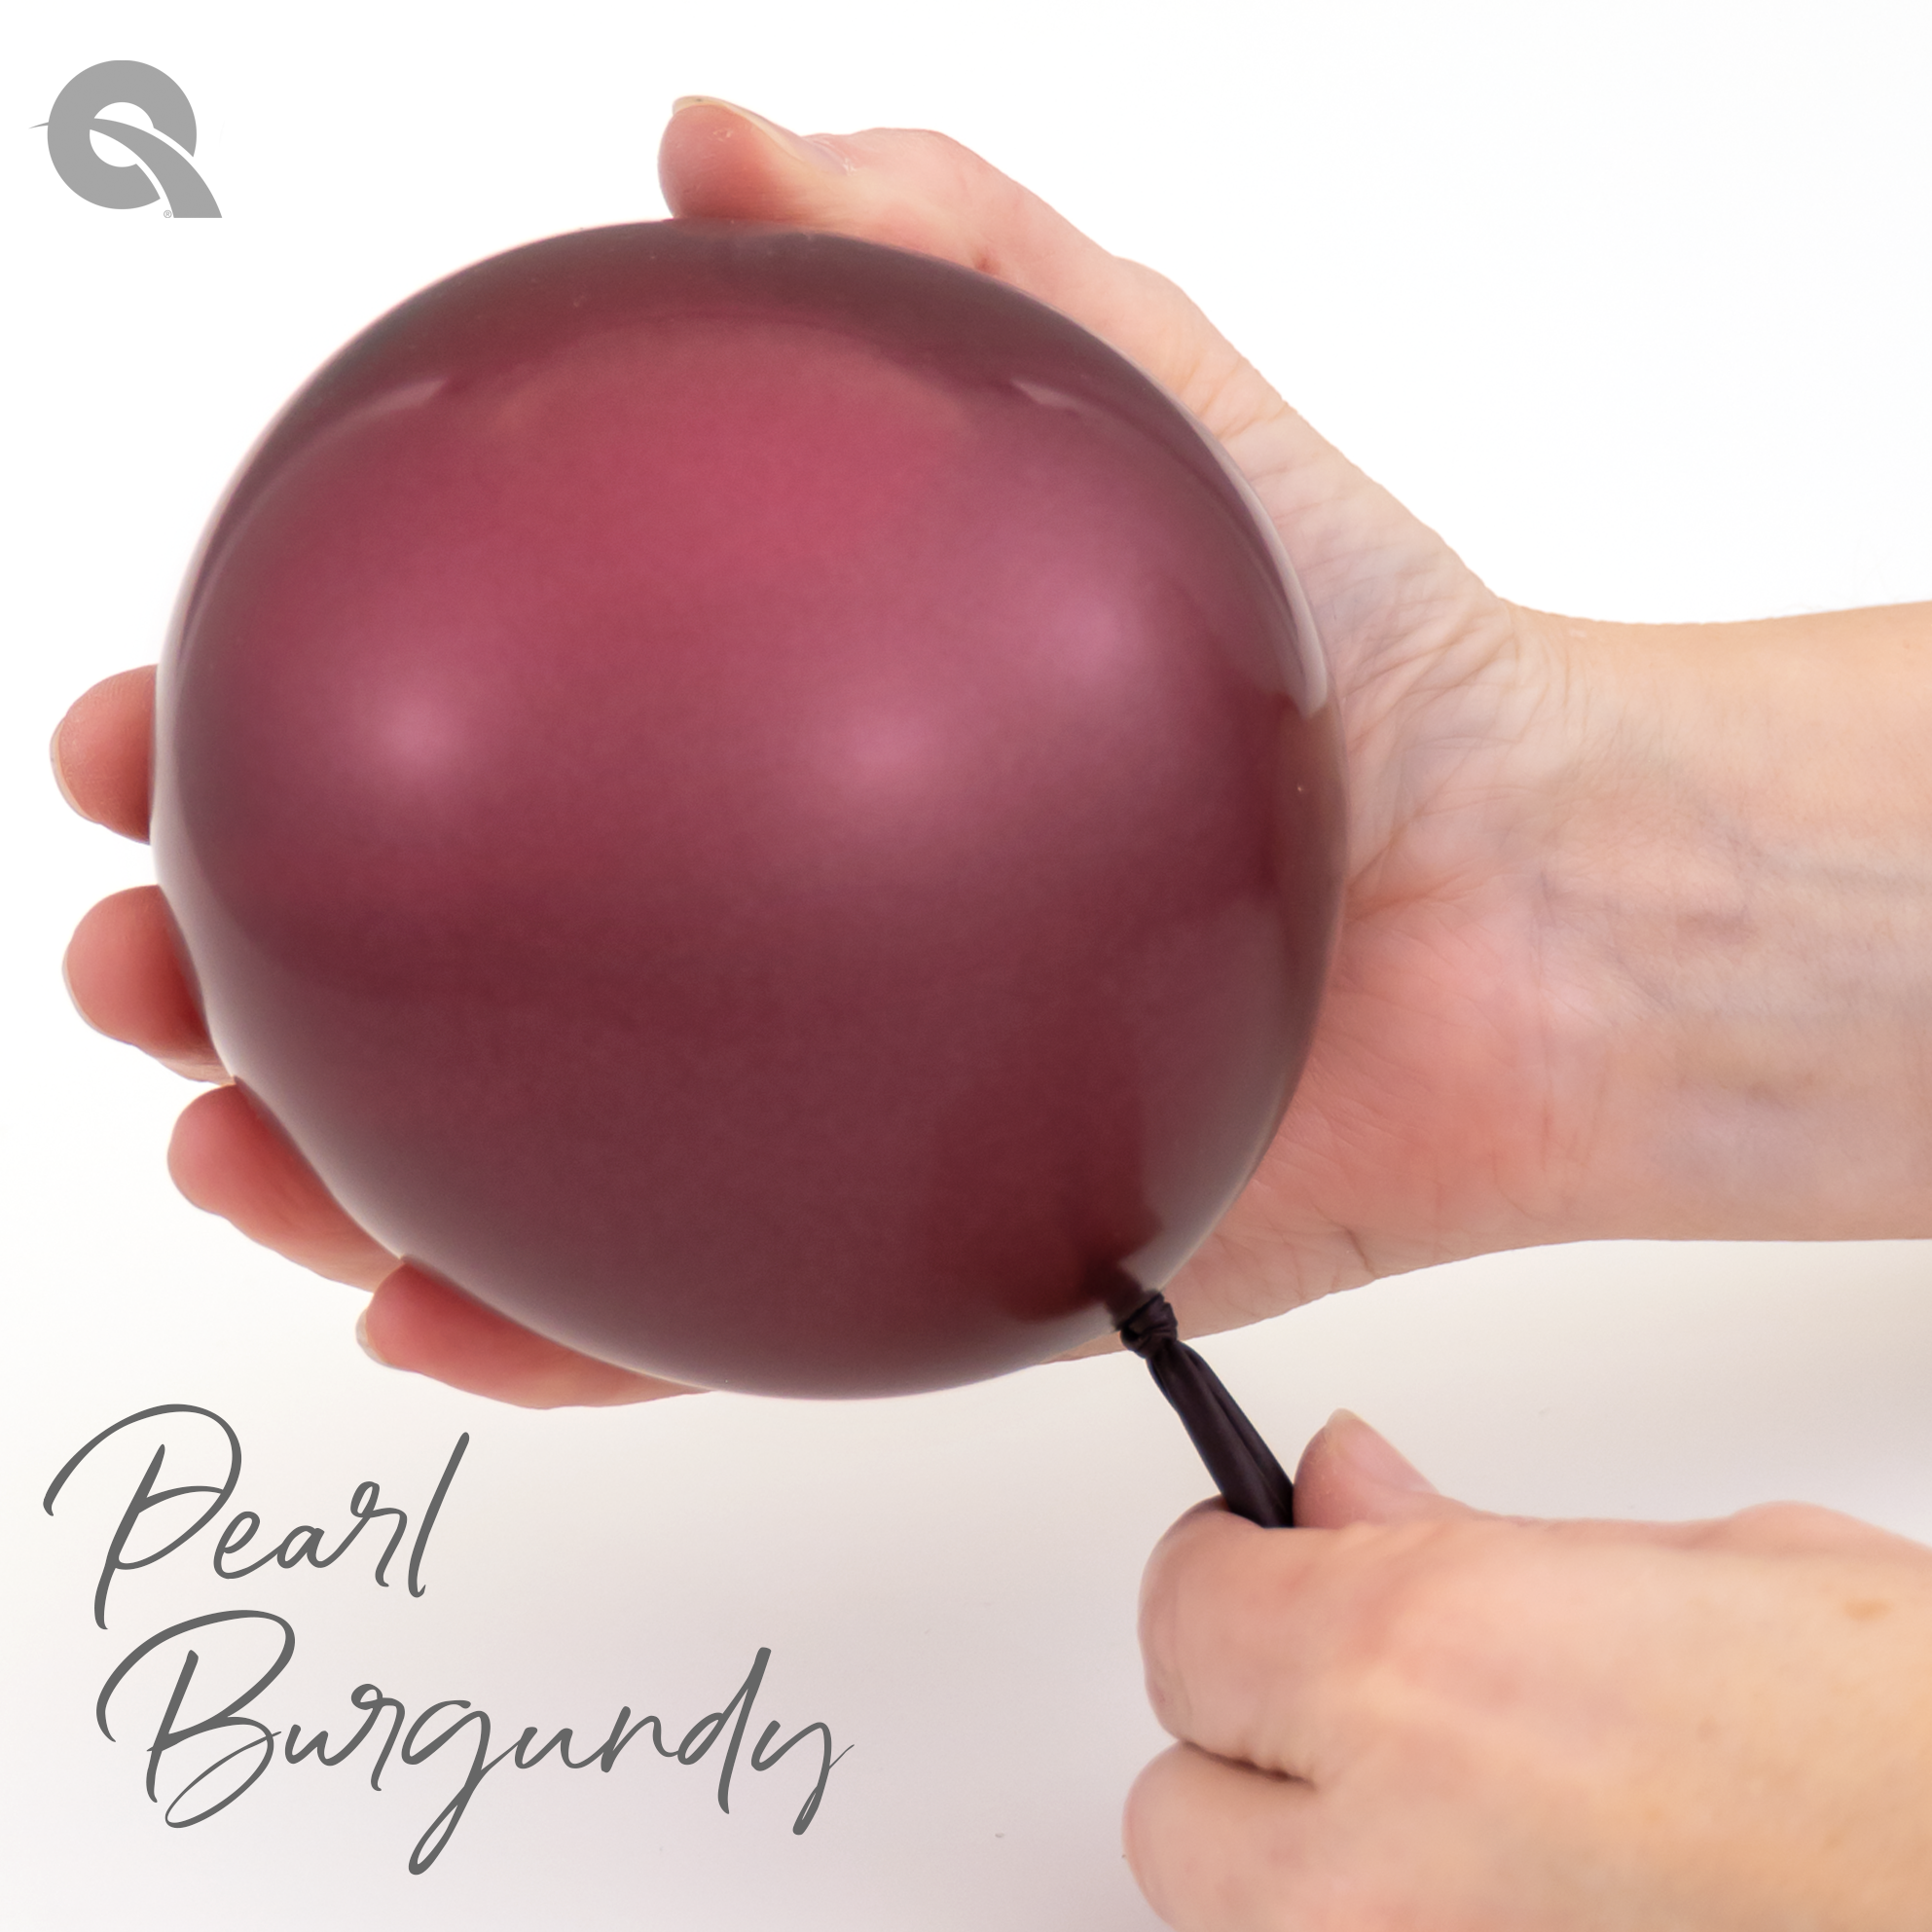 Qualatex Pearl Burgundy Maroon Latex Balloons Qualatex Latex